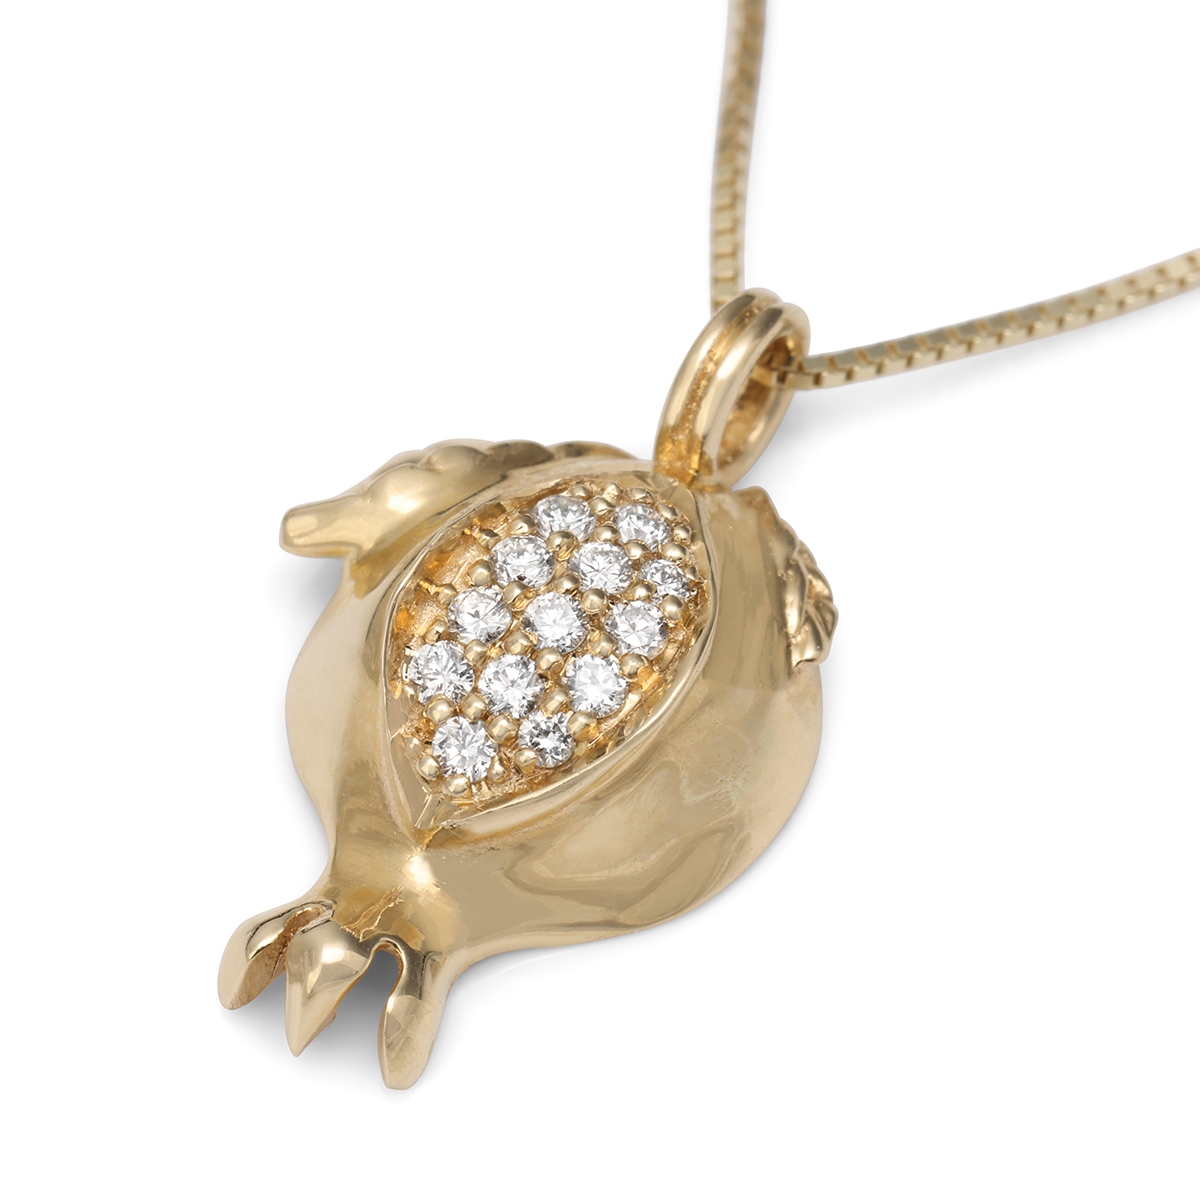 Rafael Jewelry Handmade 14K Yellow Gold Pomegranate Pendant Necklace With White Diamonds - 1